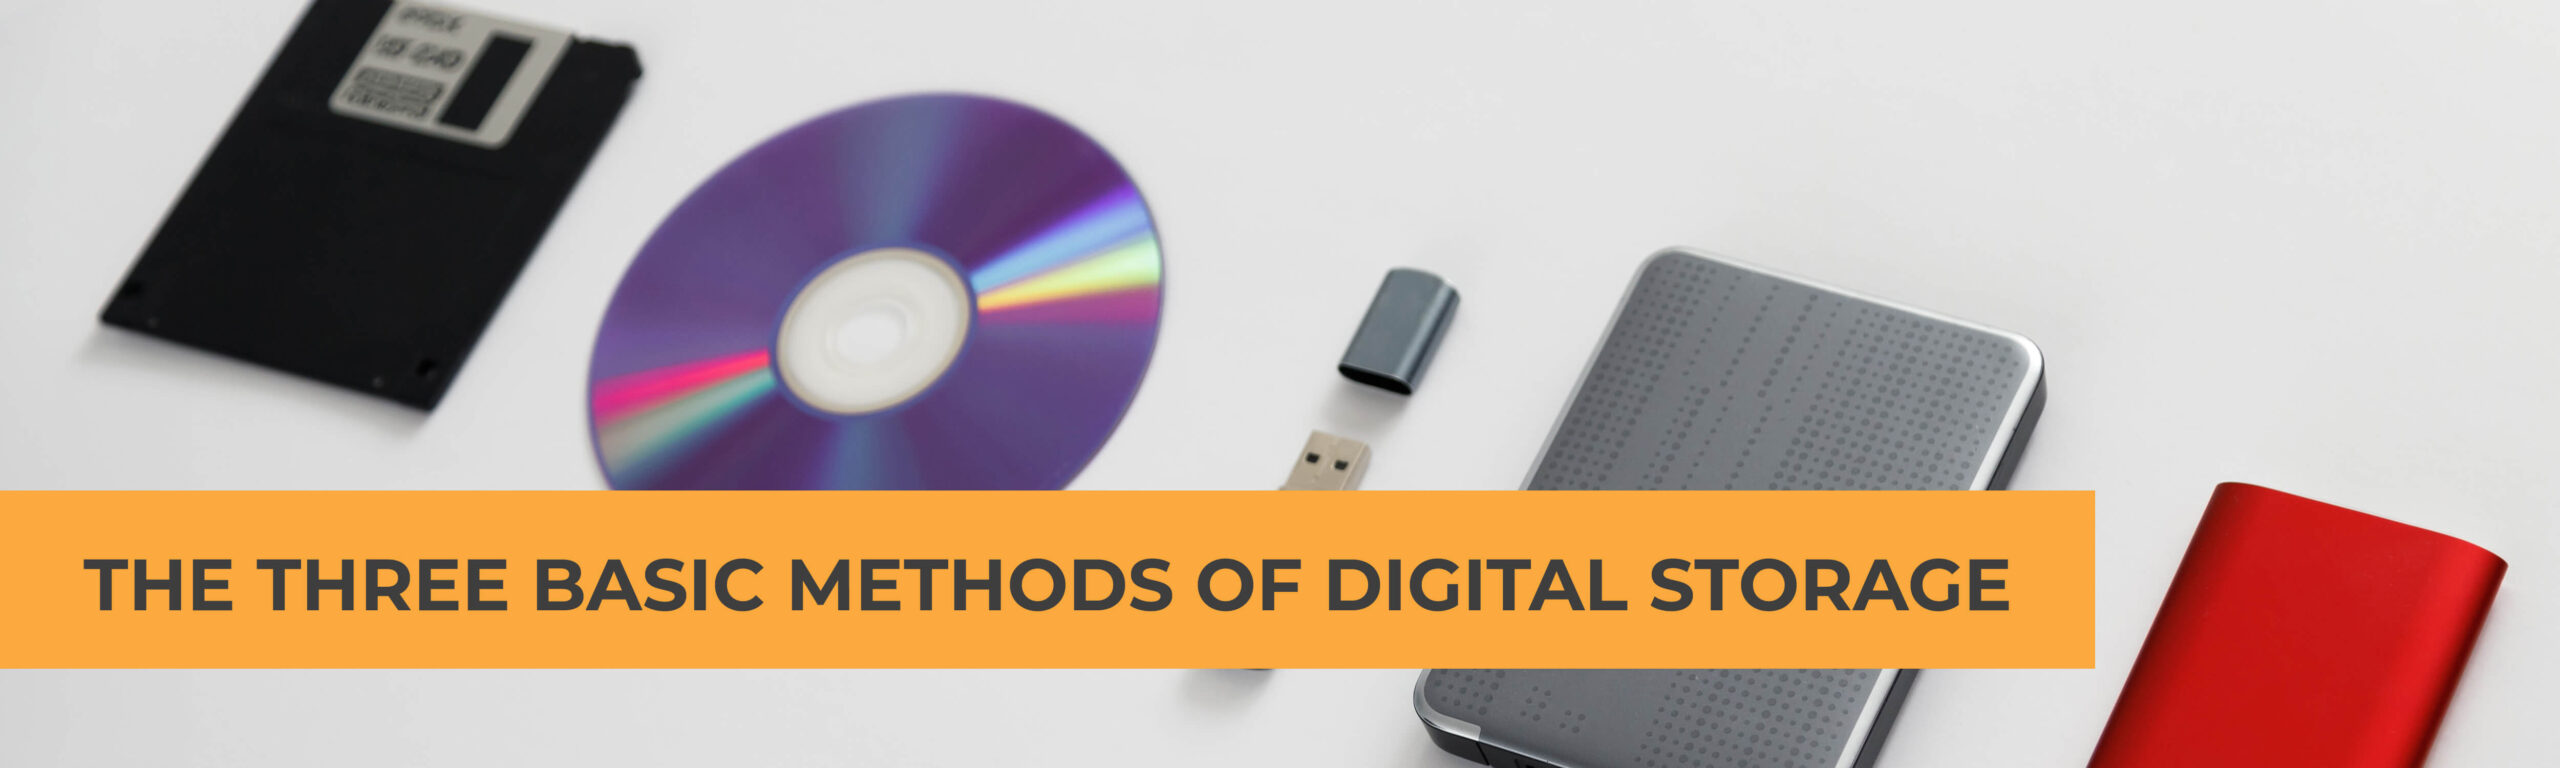 The Three Basic Methods of Digital Storage